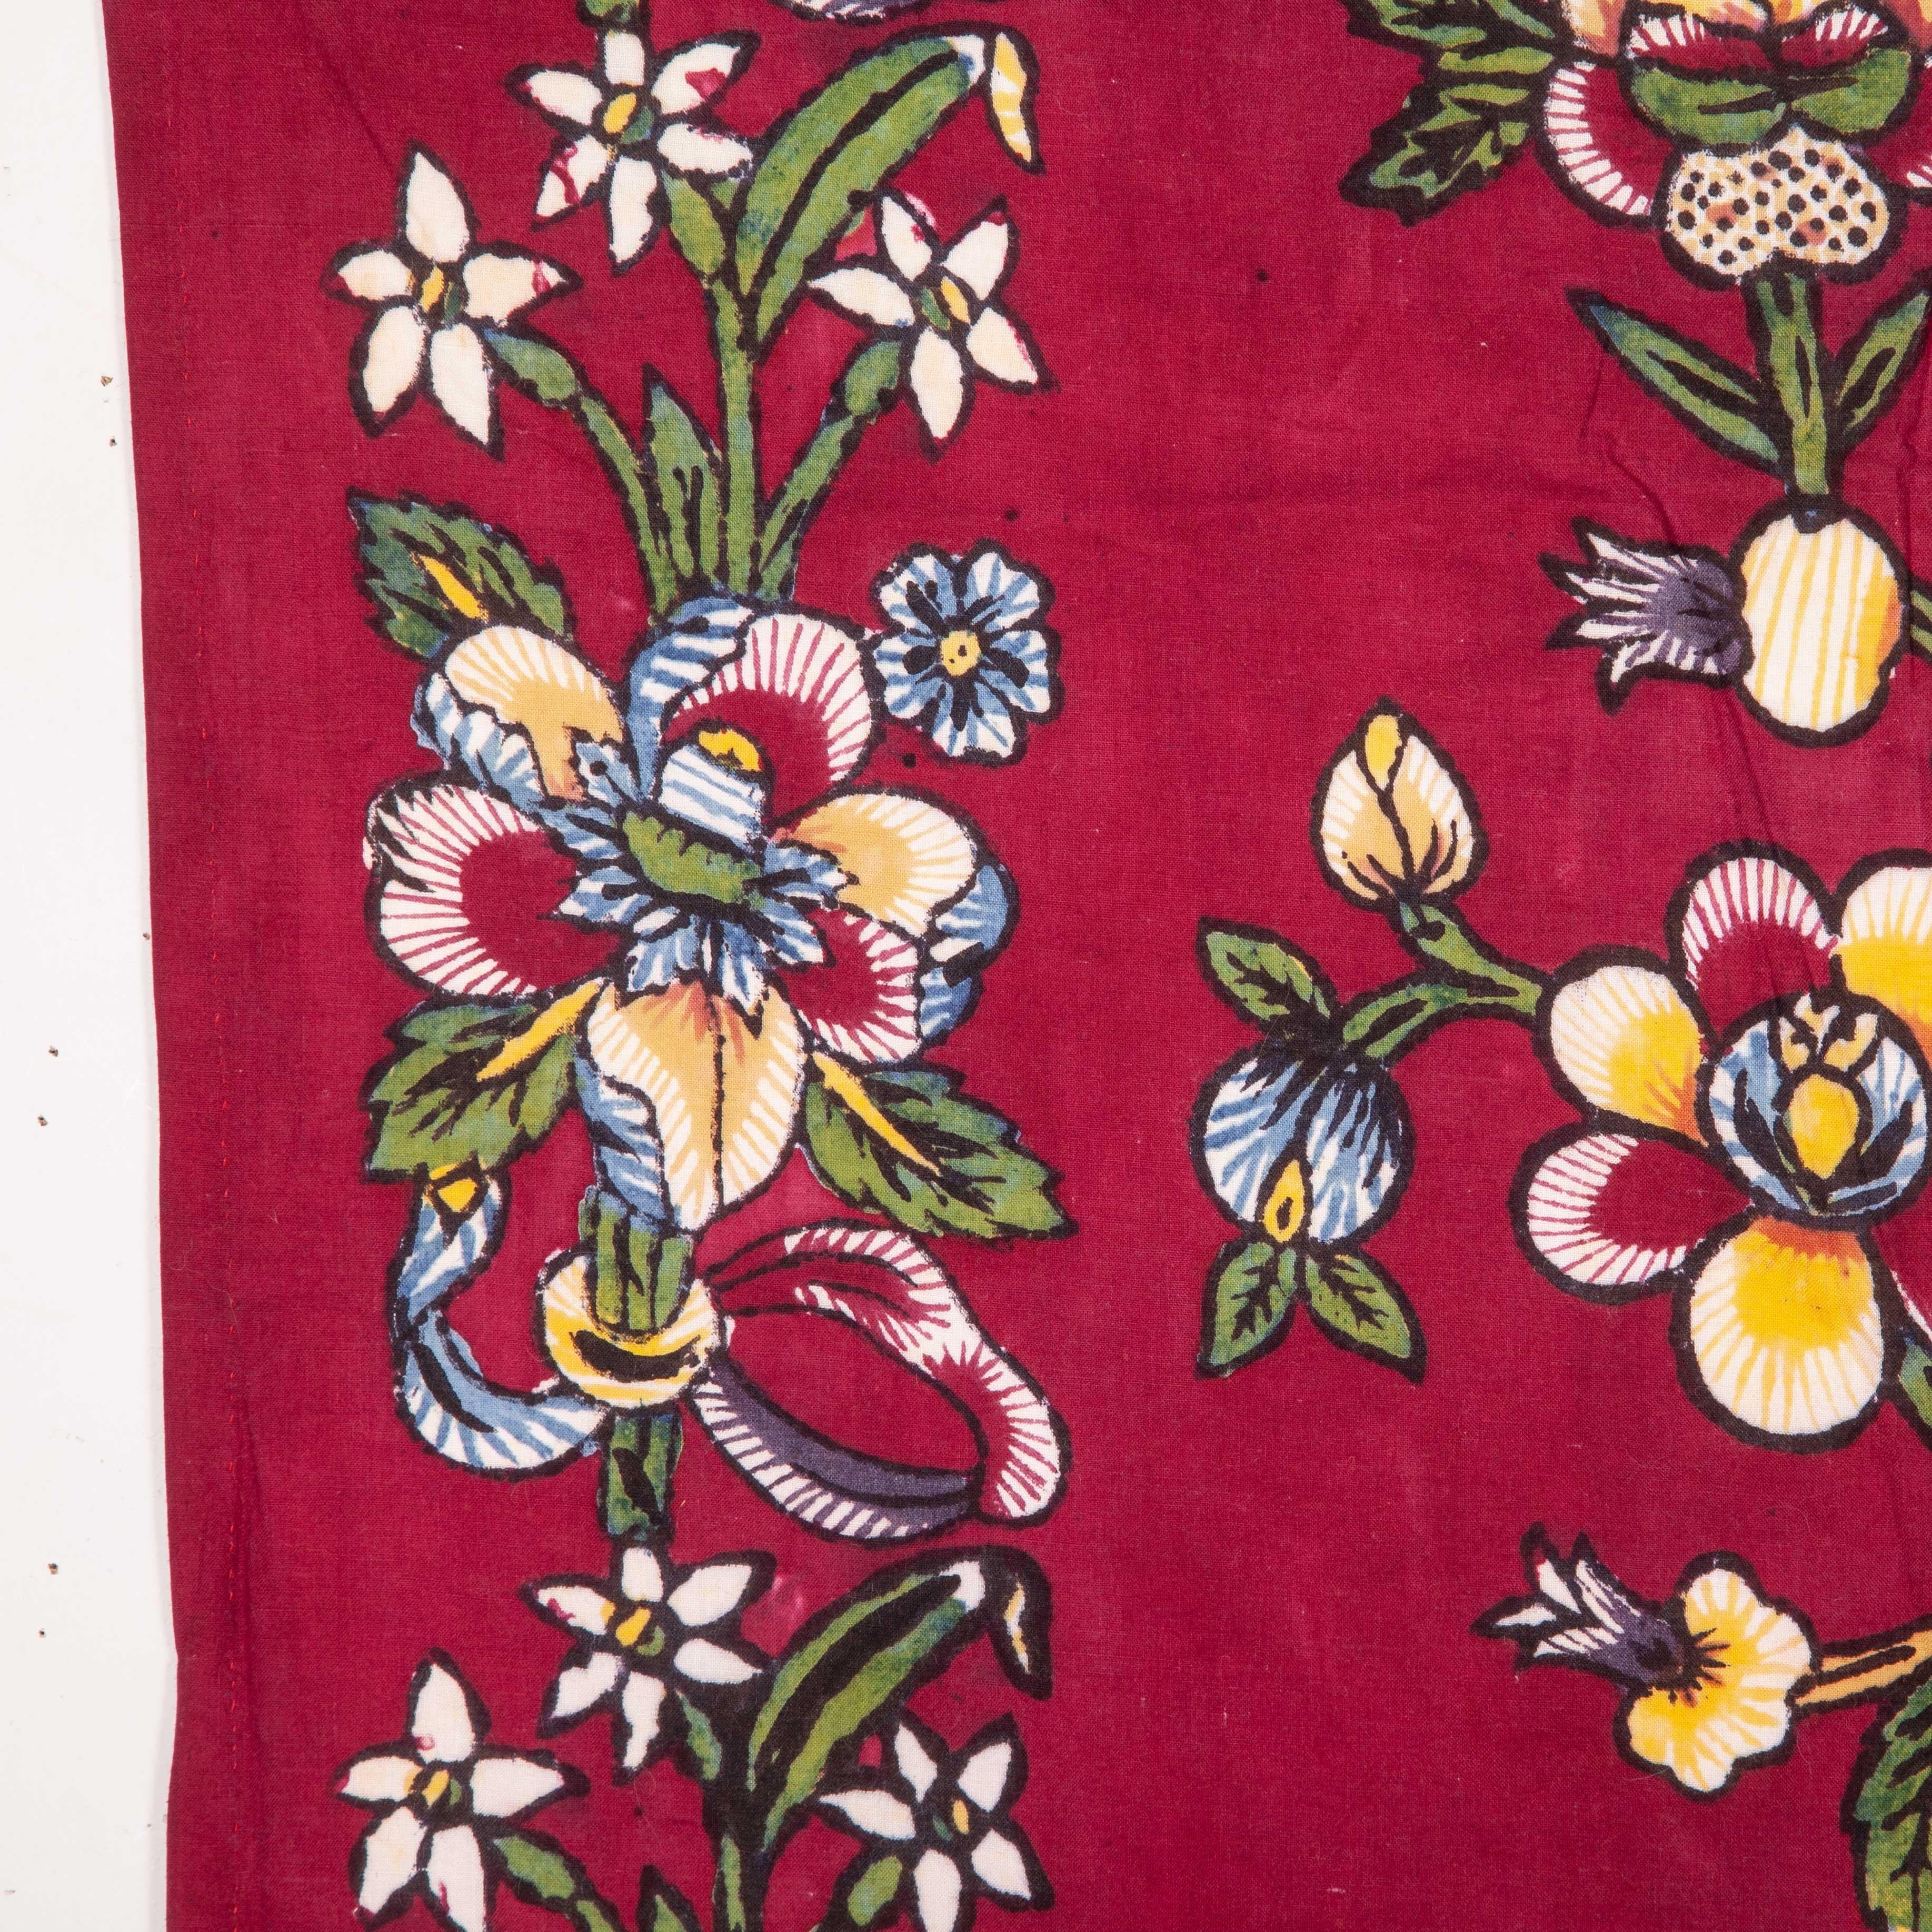 Kalamkari Anatolian Turkish Folk Art Block Printed and Painted Bokhce 'Wrapping Cloth'